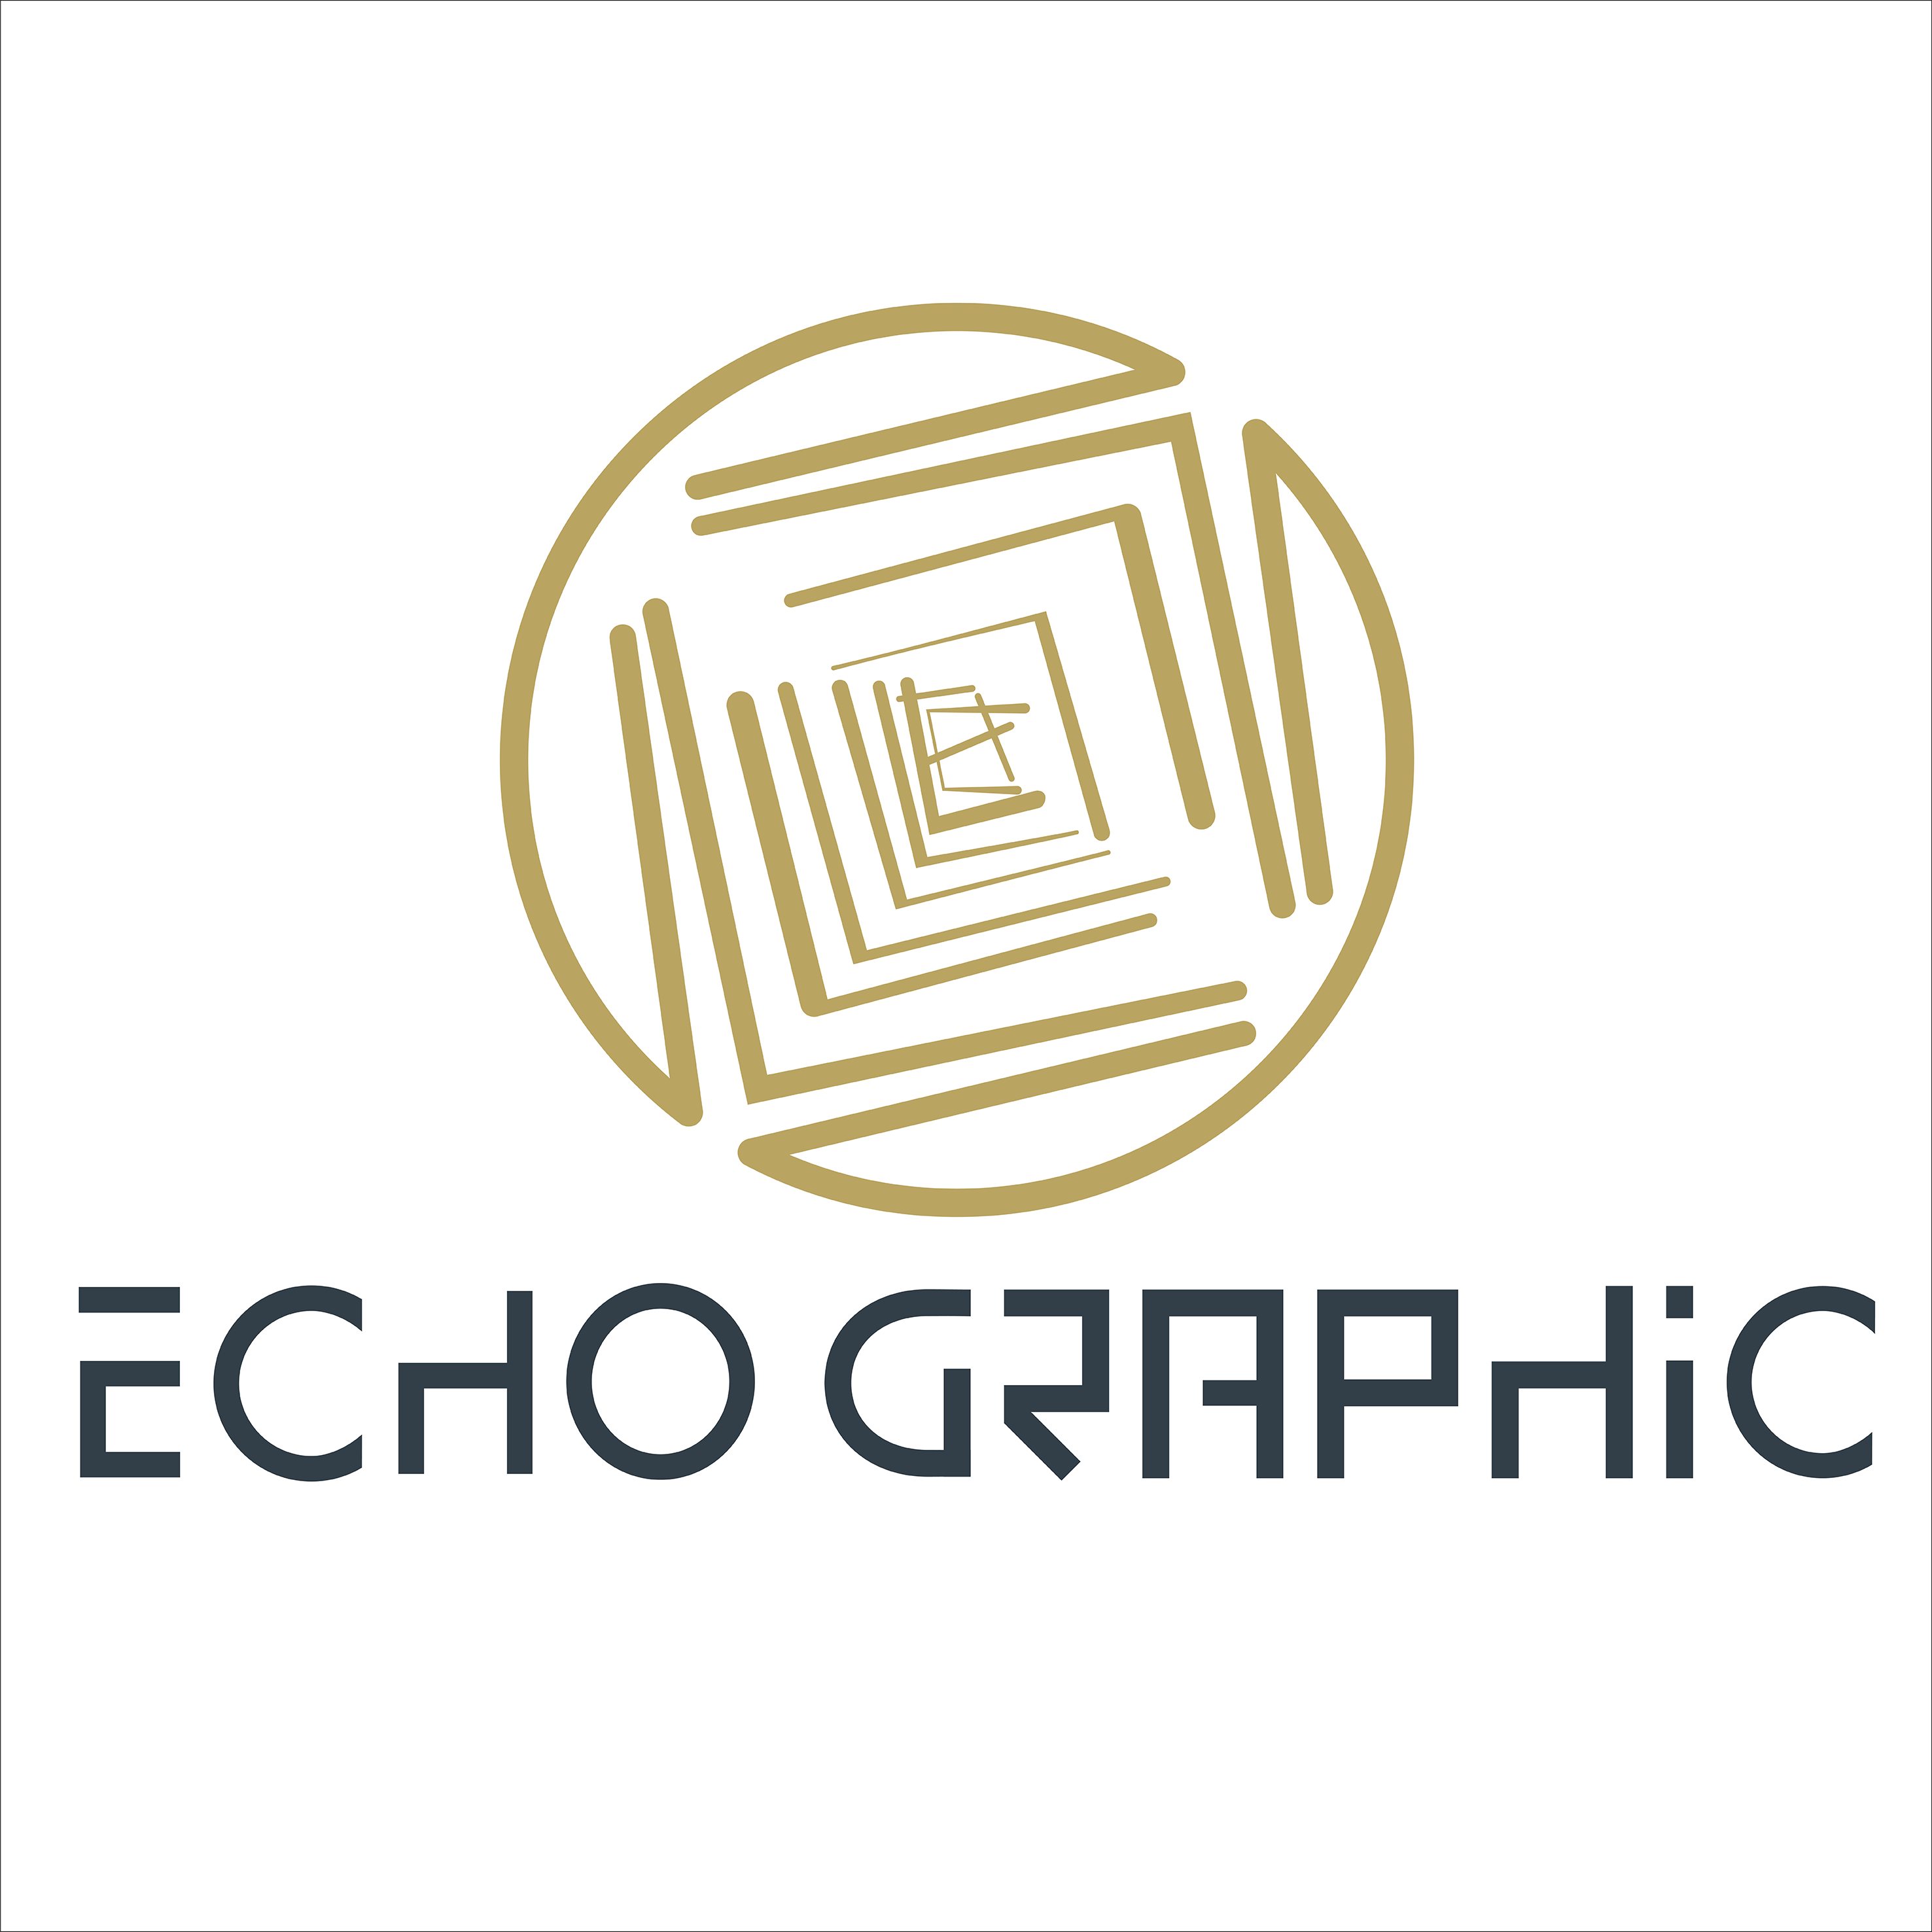 echographic